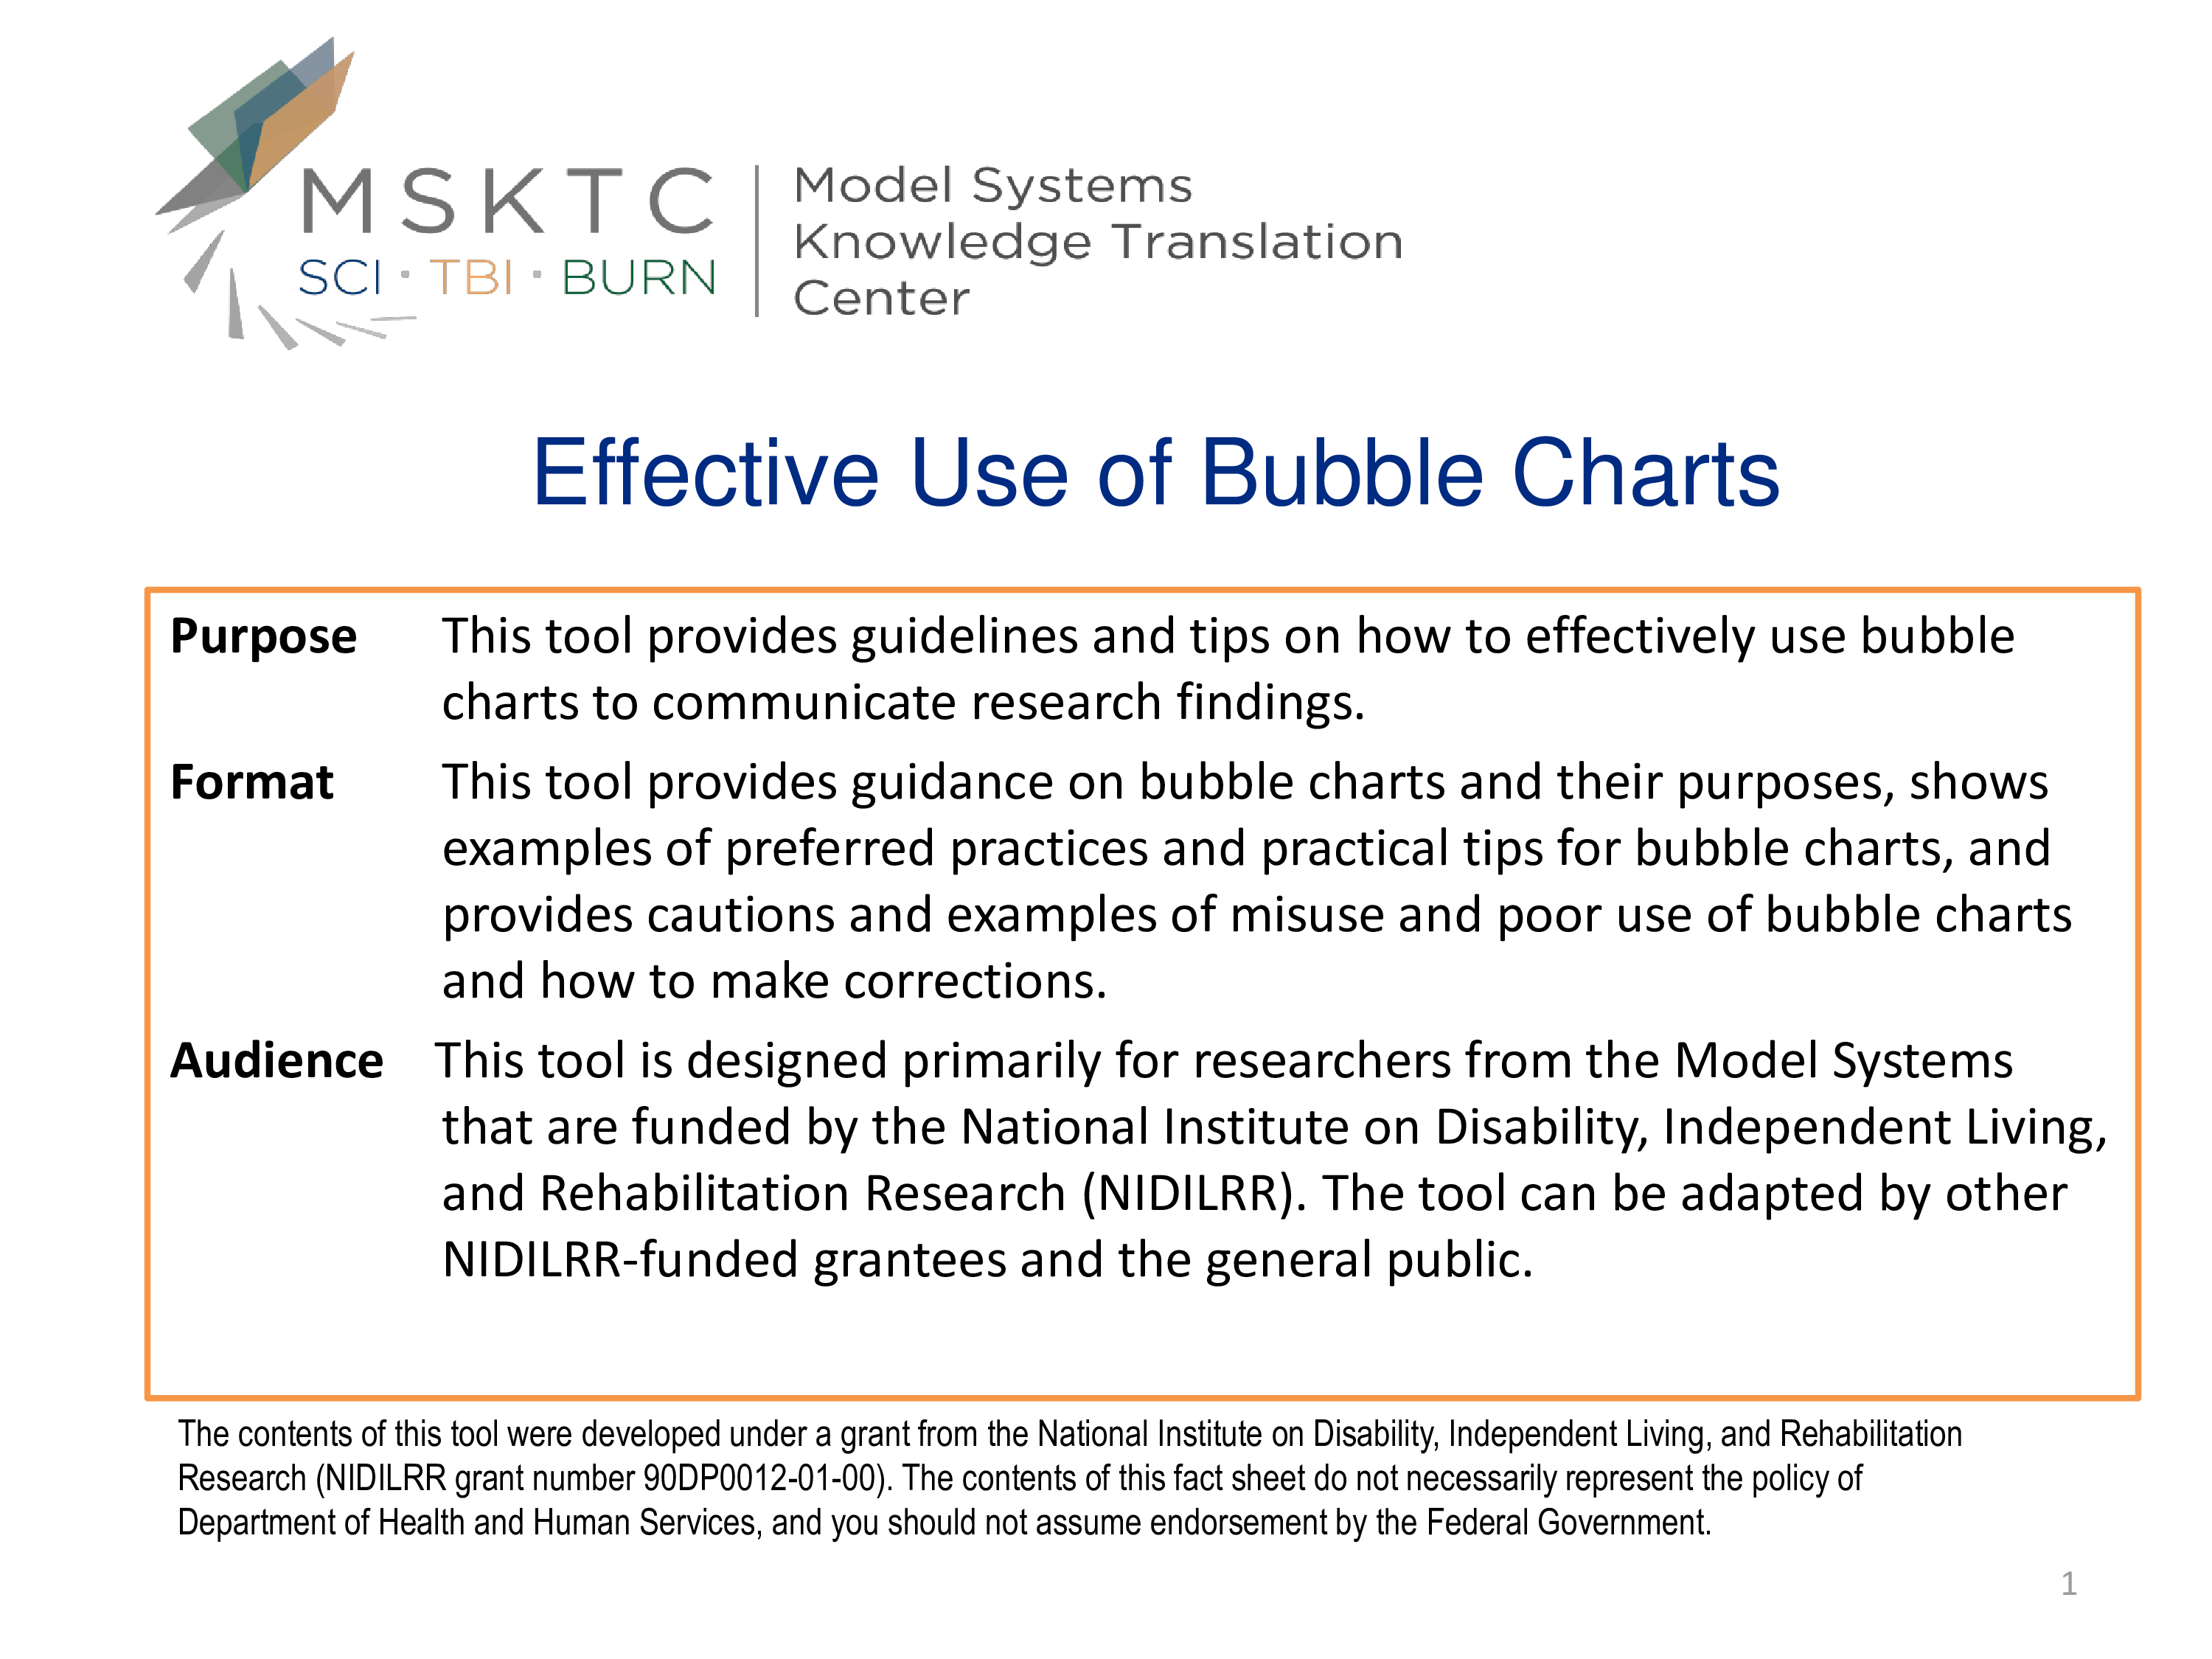 bubble excel chart plantilla imagen principal